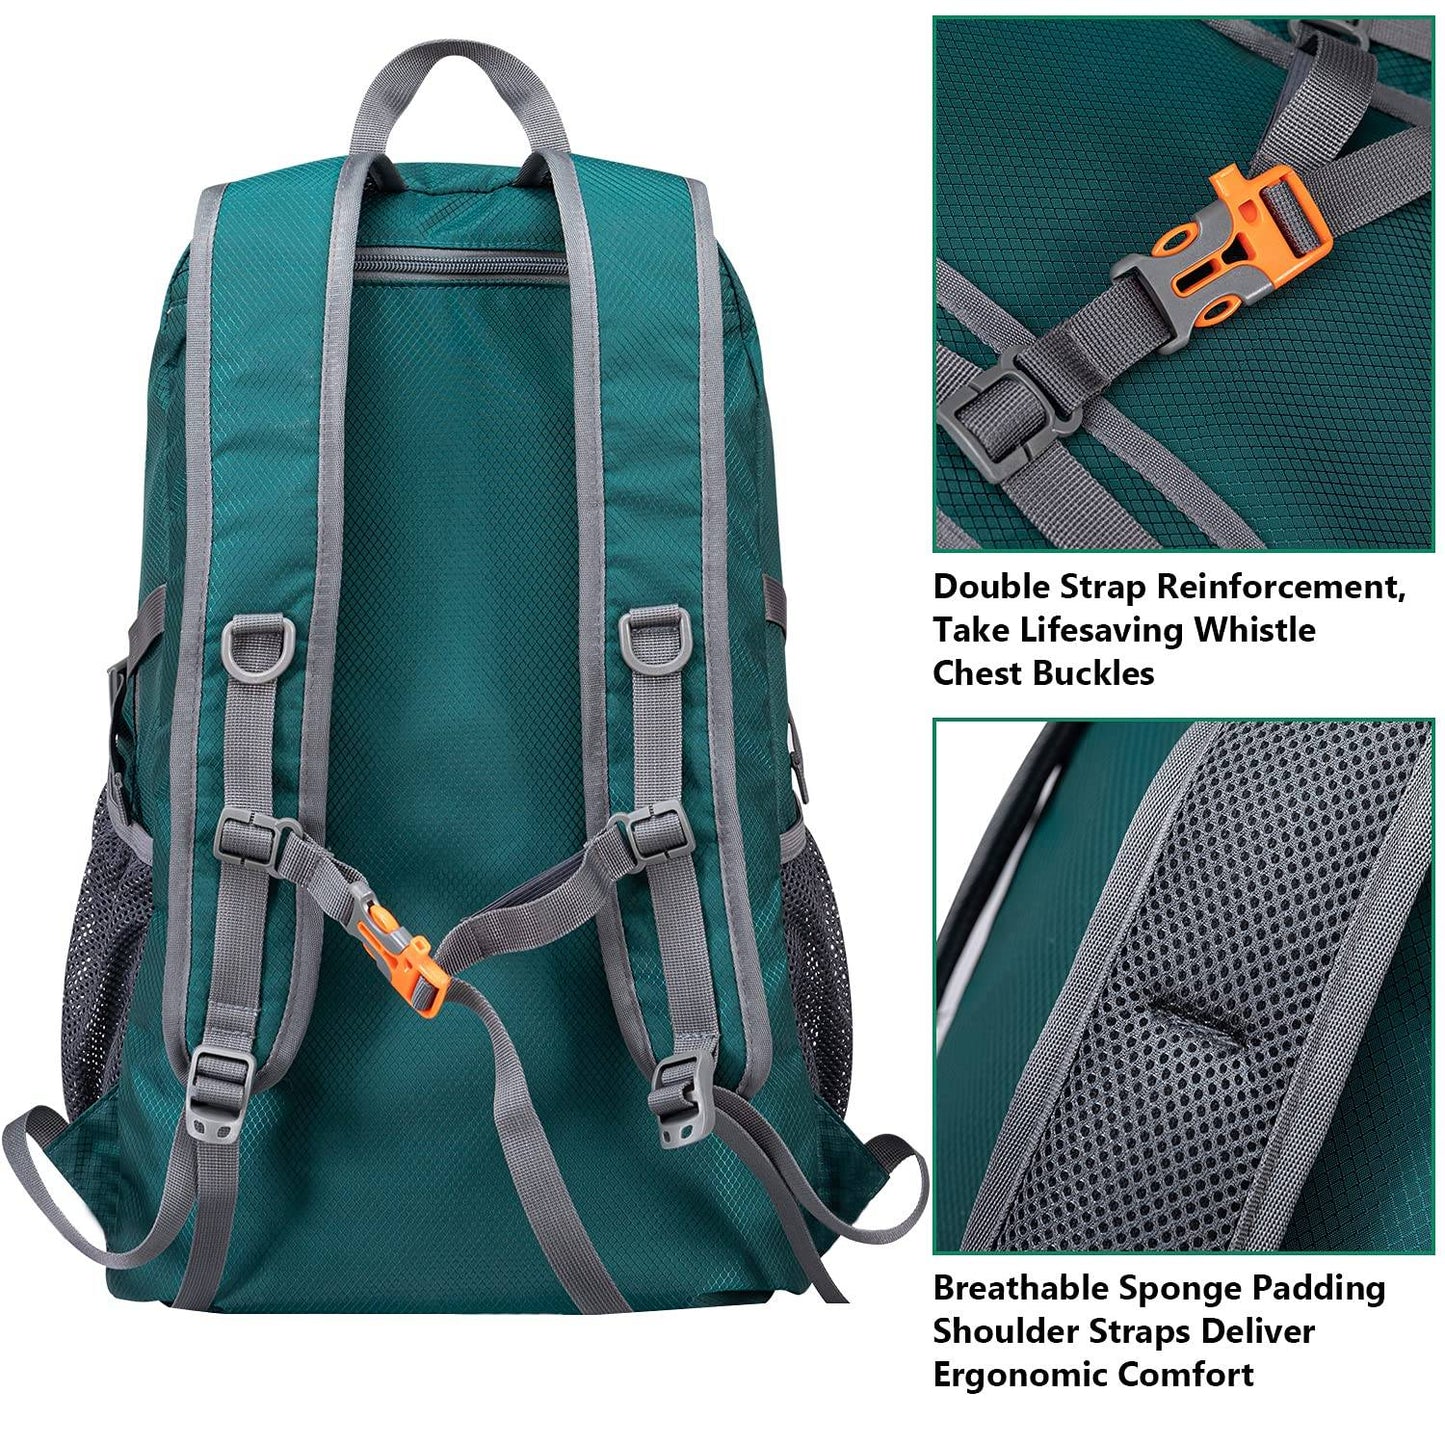 TOMULE Camping Hiking Daypacks, 40L Lightweight Packable Hiking Backpack Travel Backpack for Women Men - Hatke